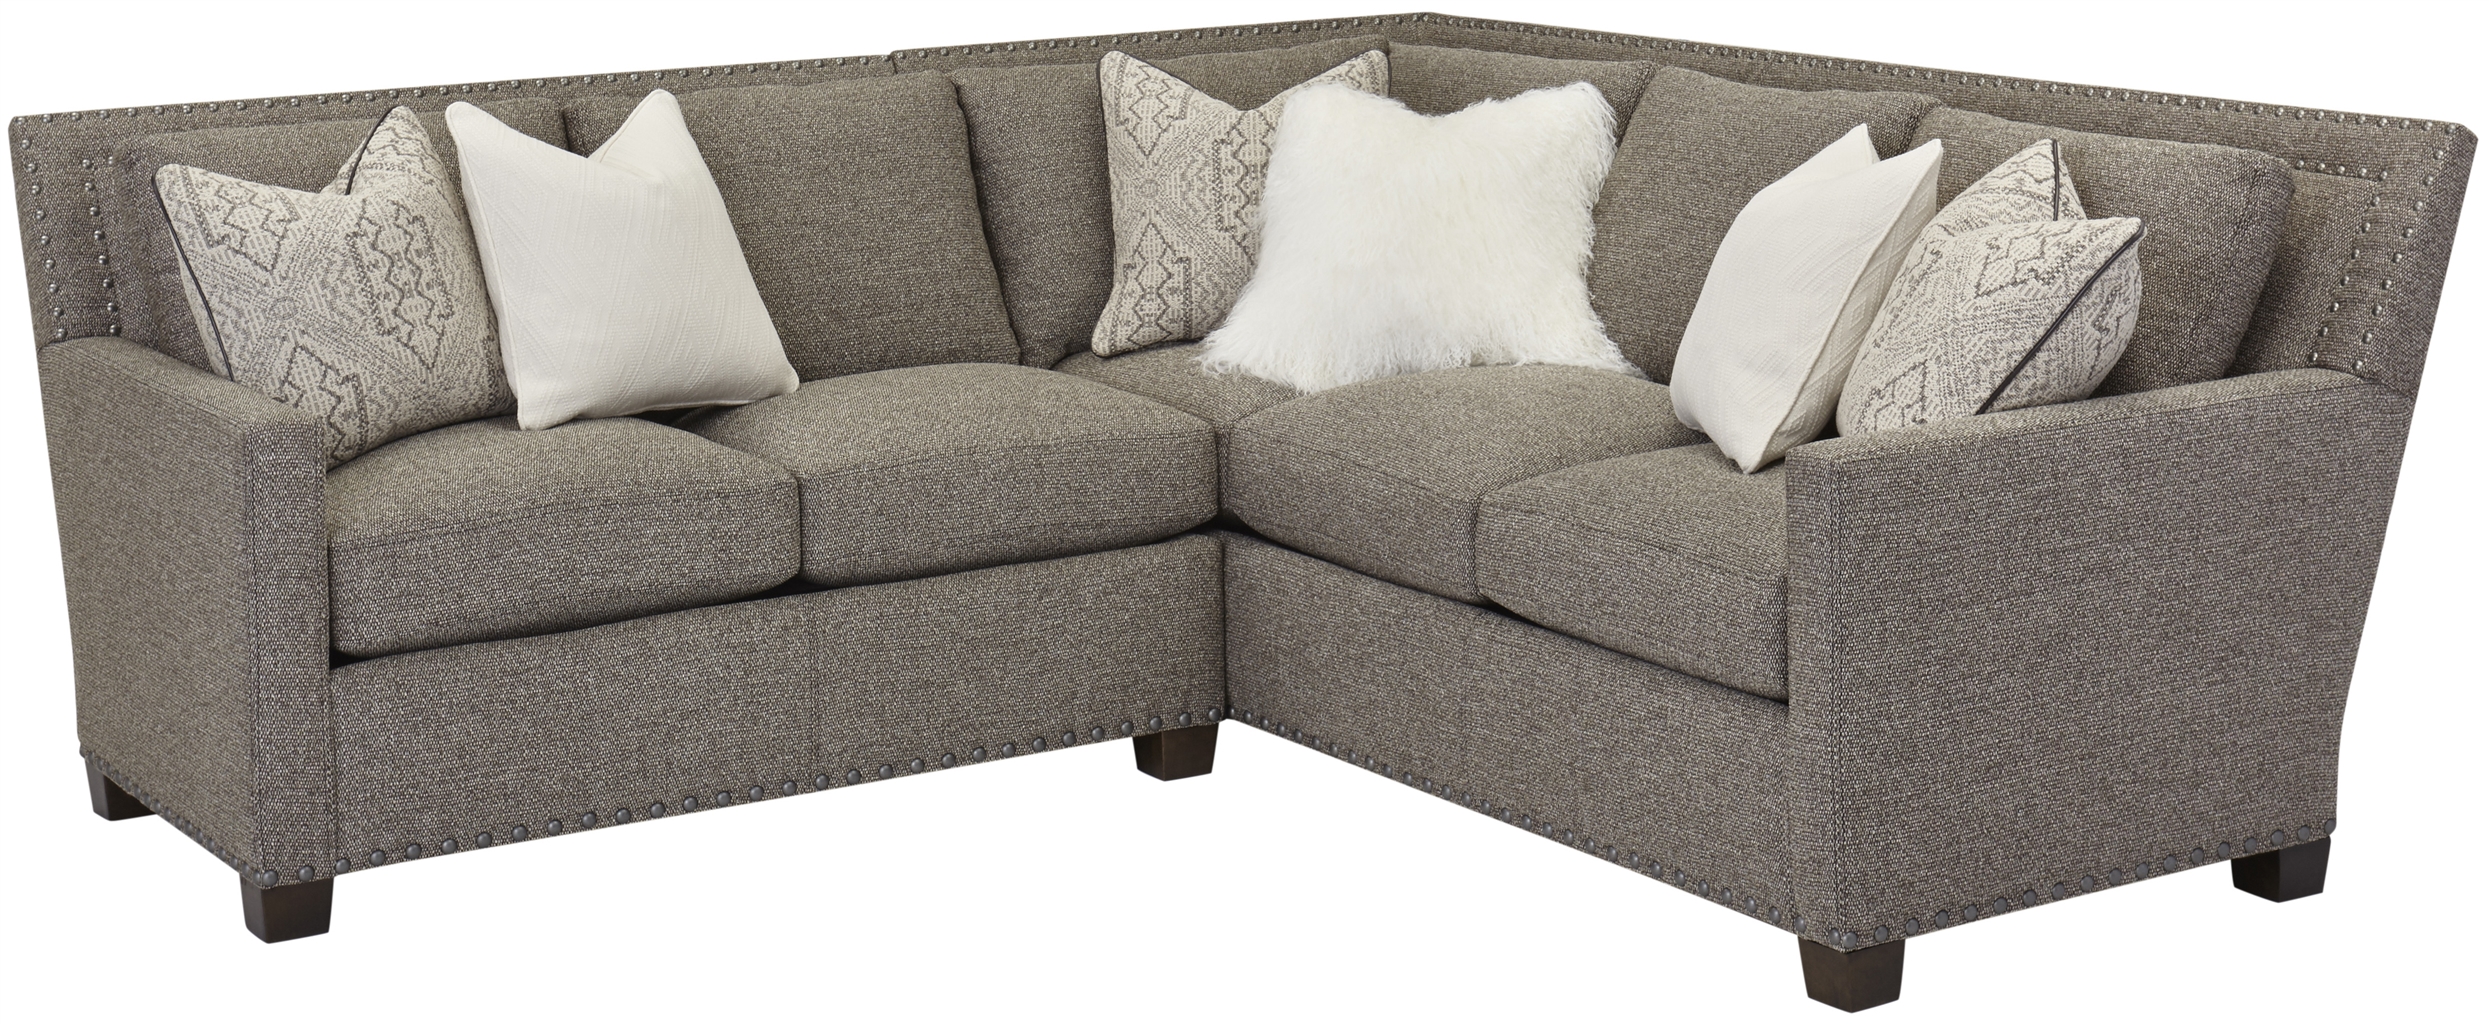 Luxury Leather & Upholstered Furniture Geneve Chocolate Upholstered Sofa